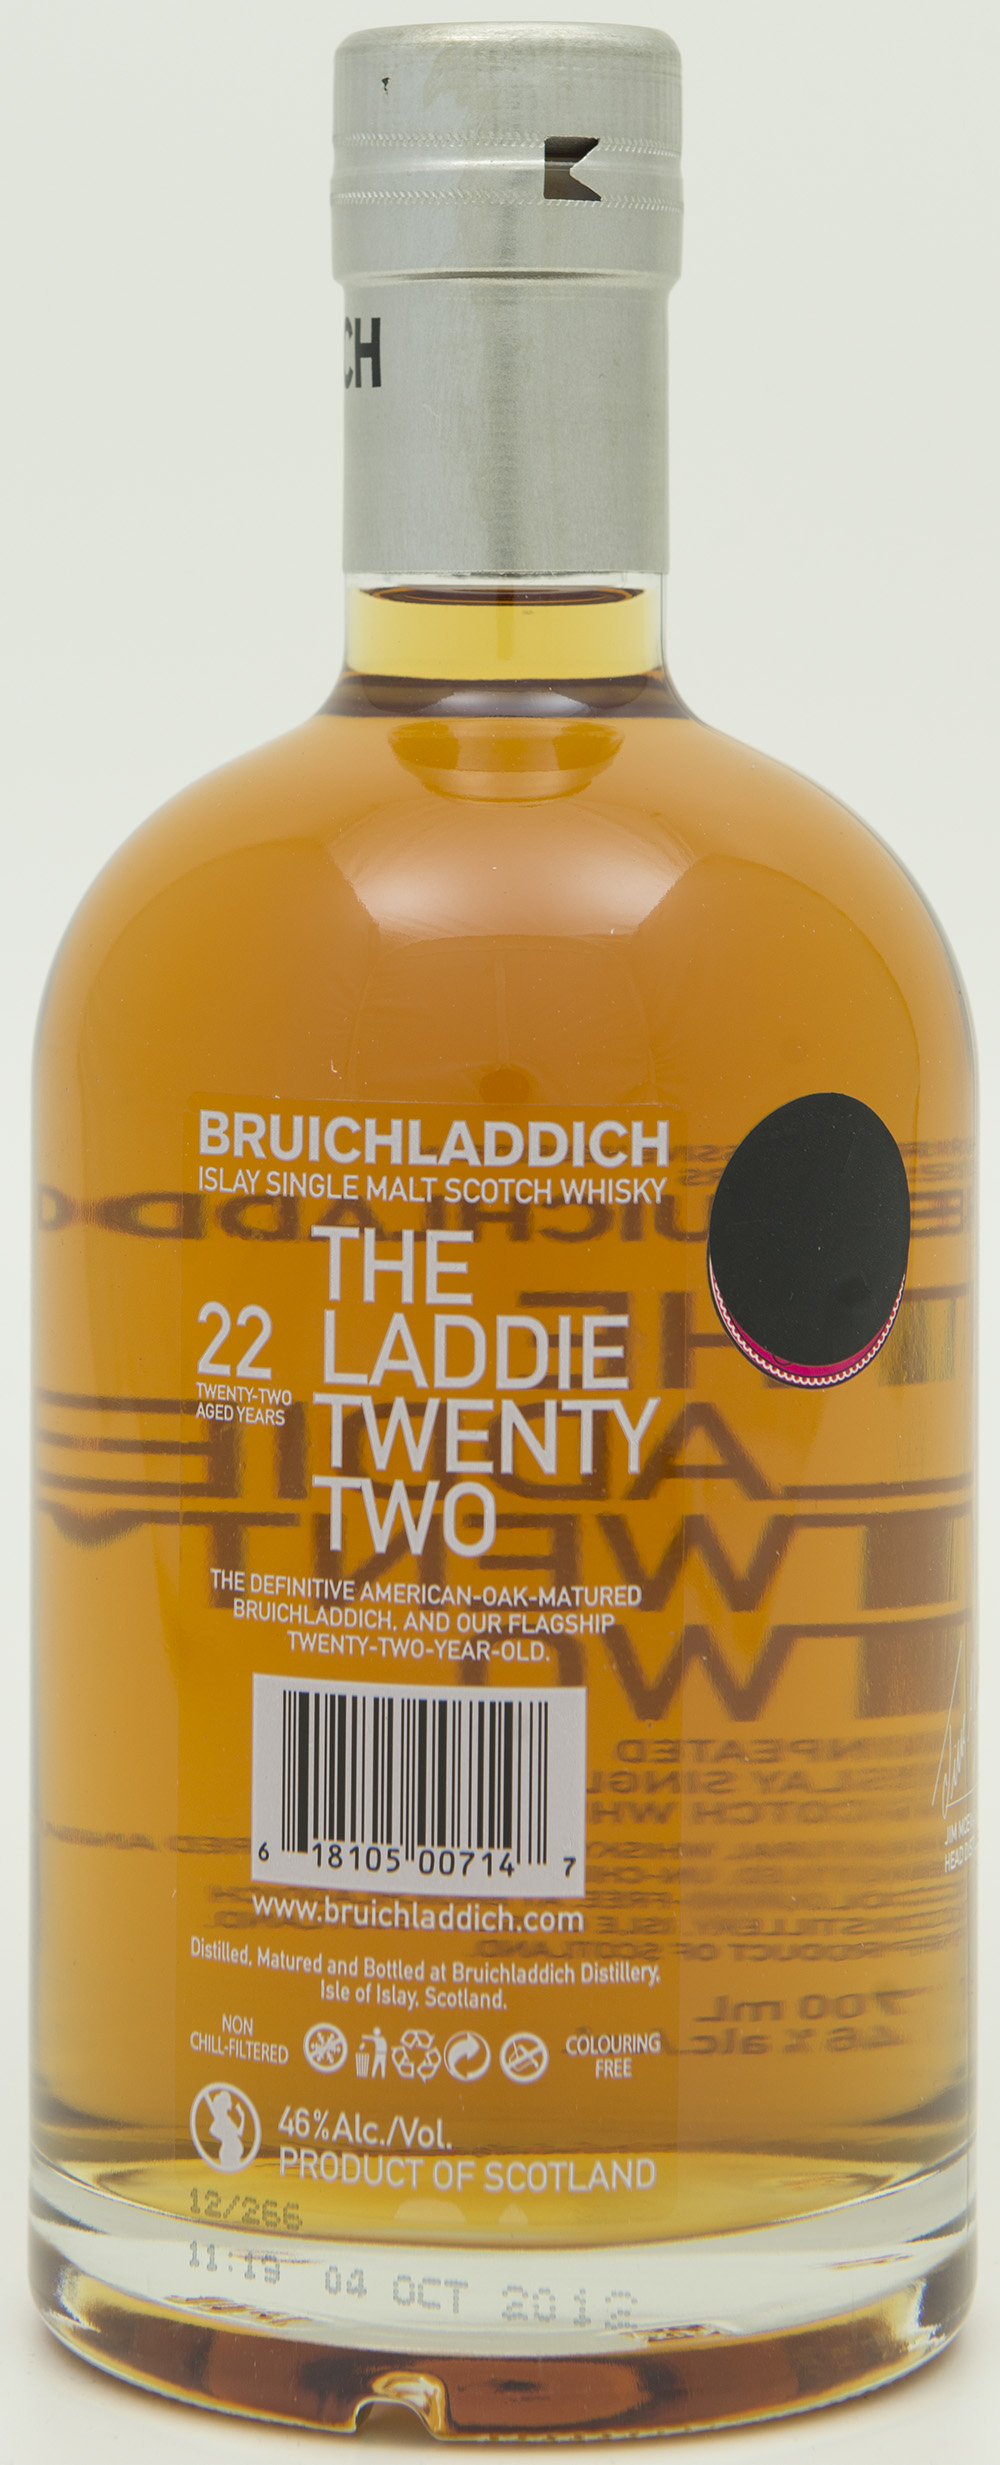 Billede: DSC_0773 - Bruichladdich The Laddie Twenty Two - bottle back.jpg